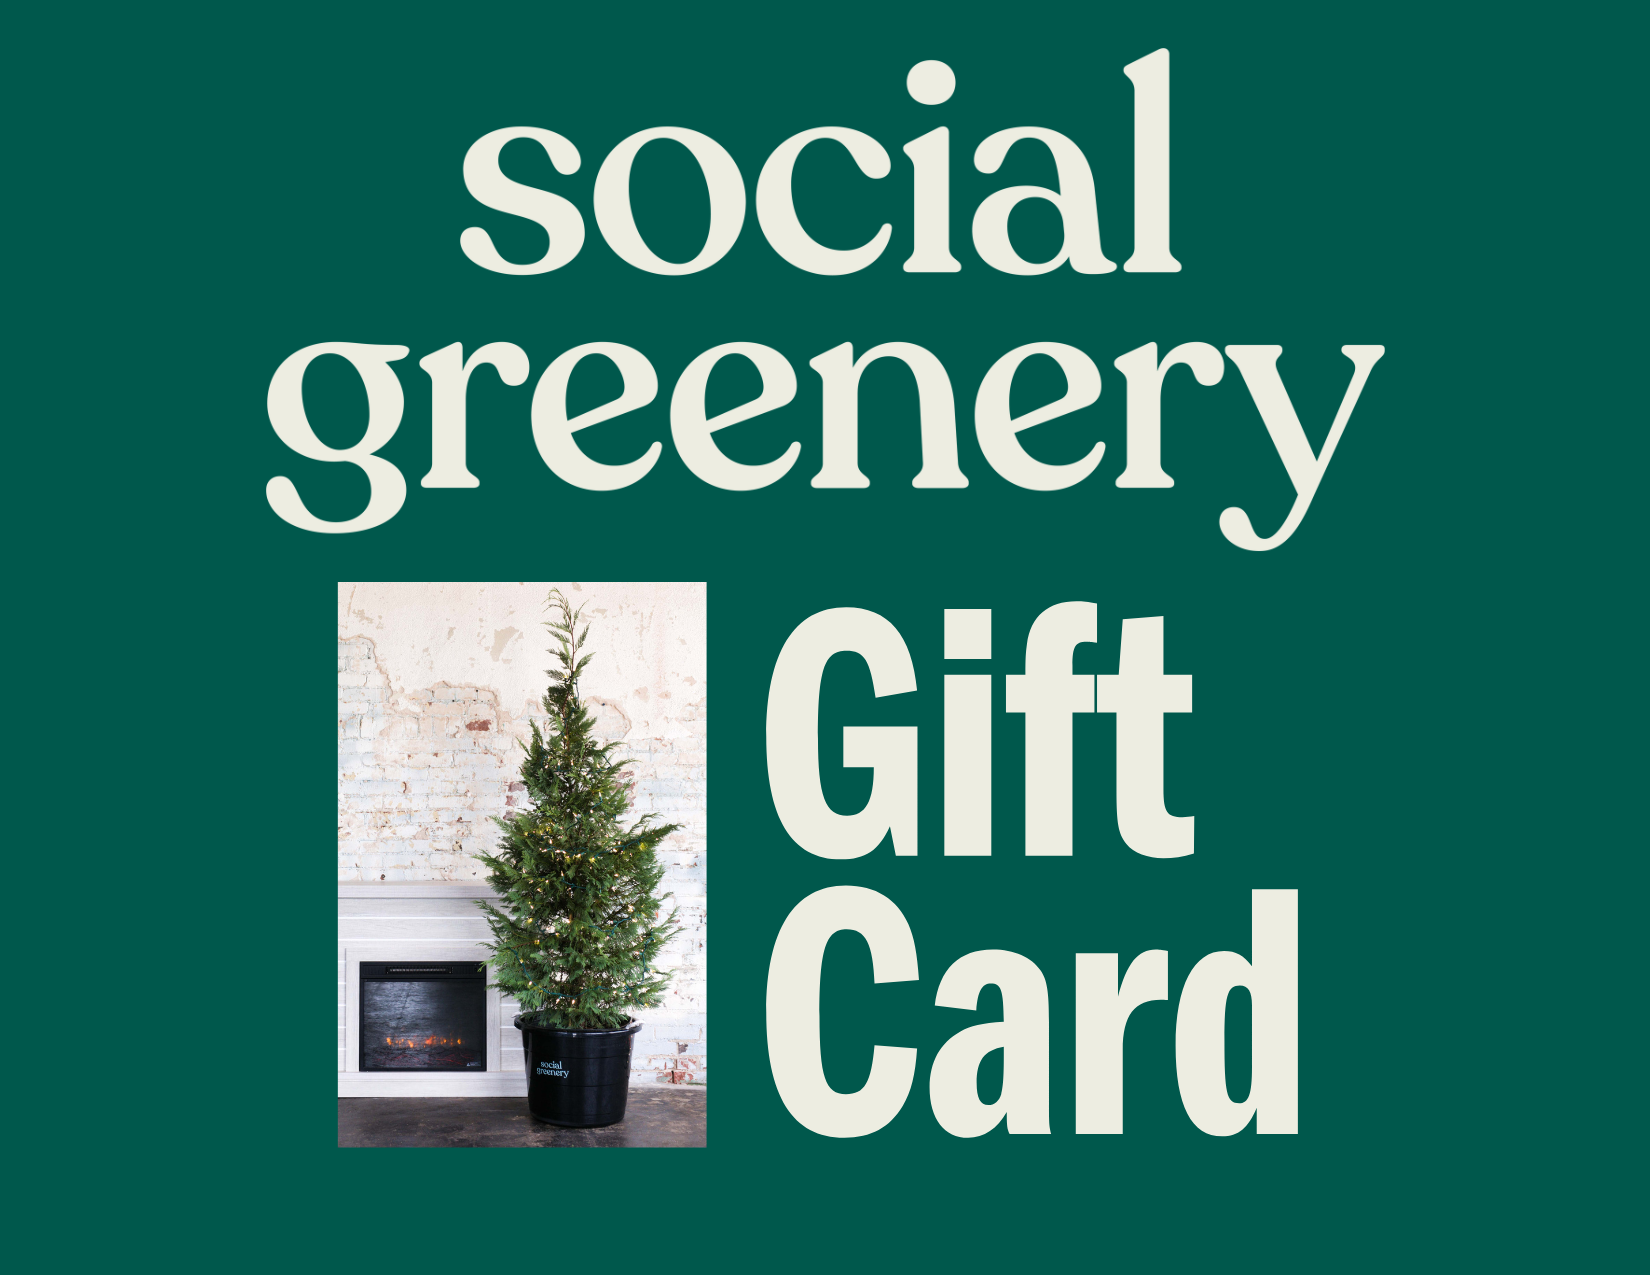 Social Greenery Gift Card